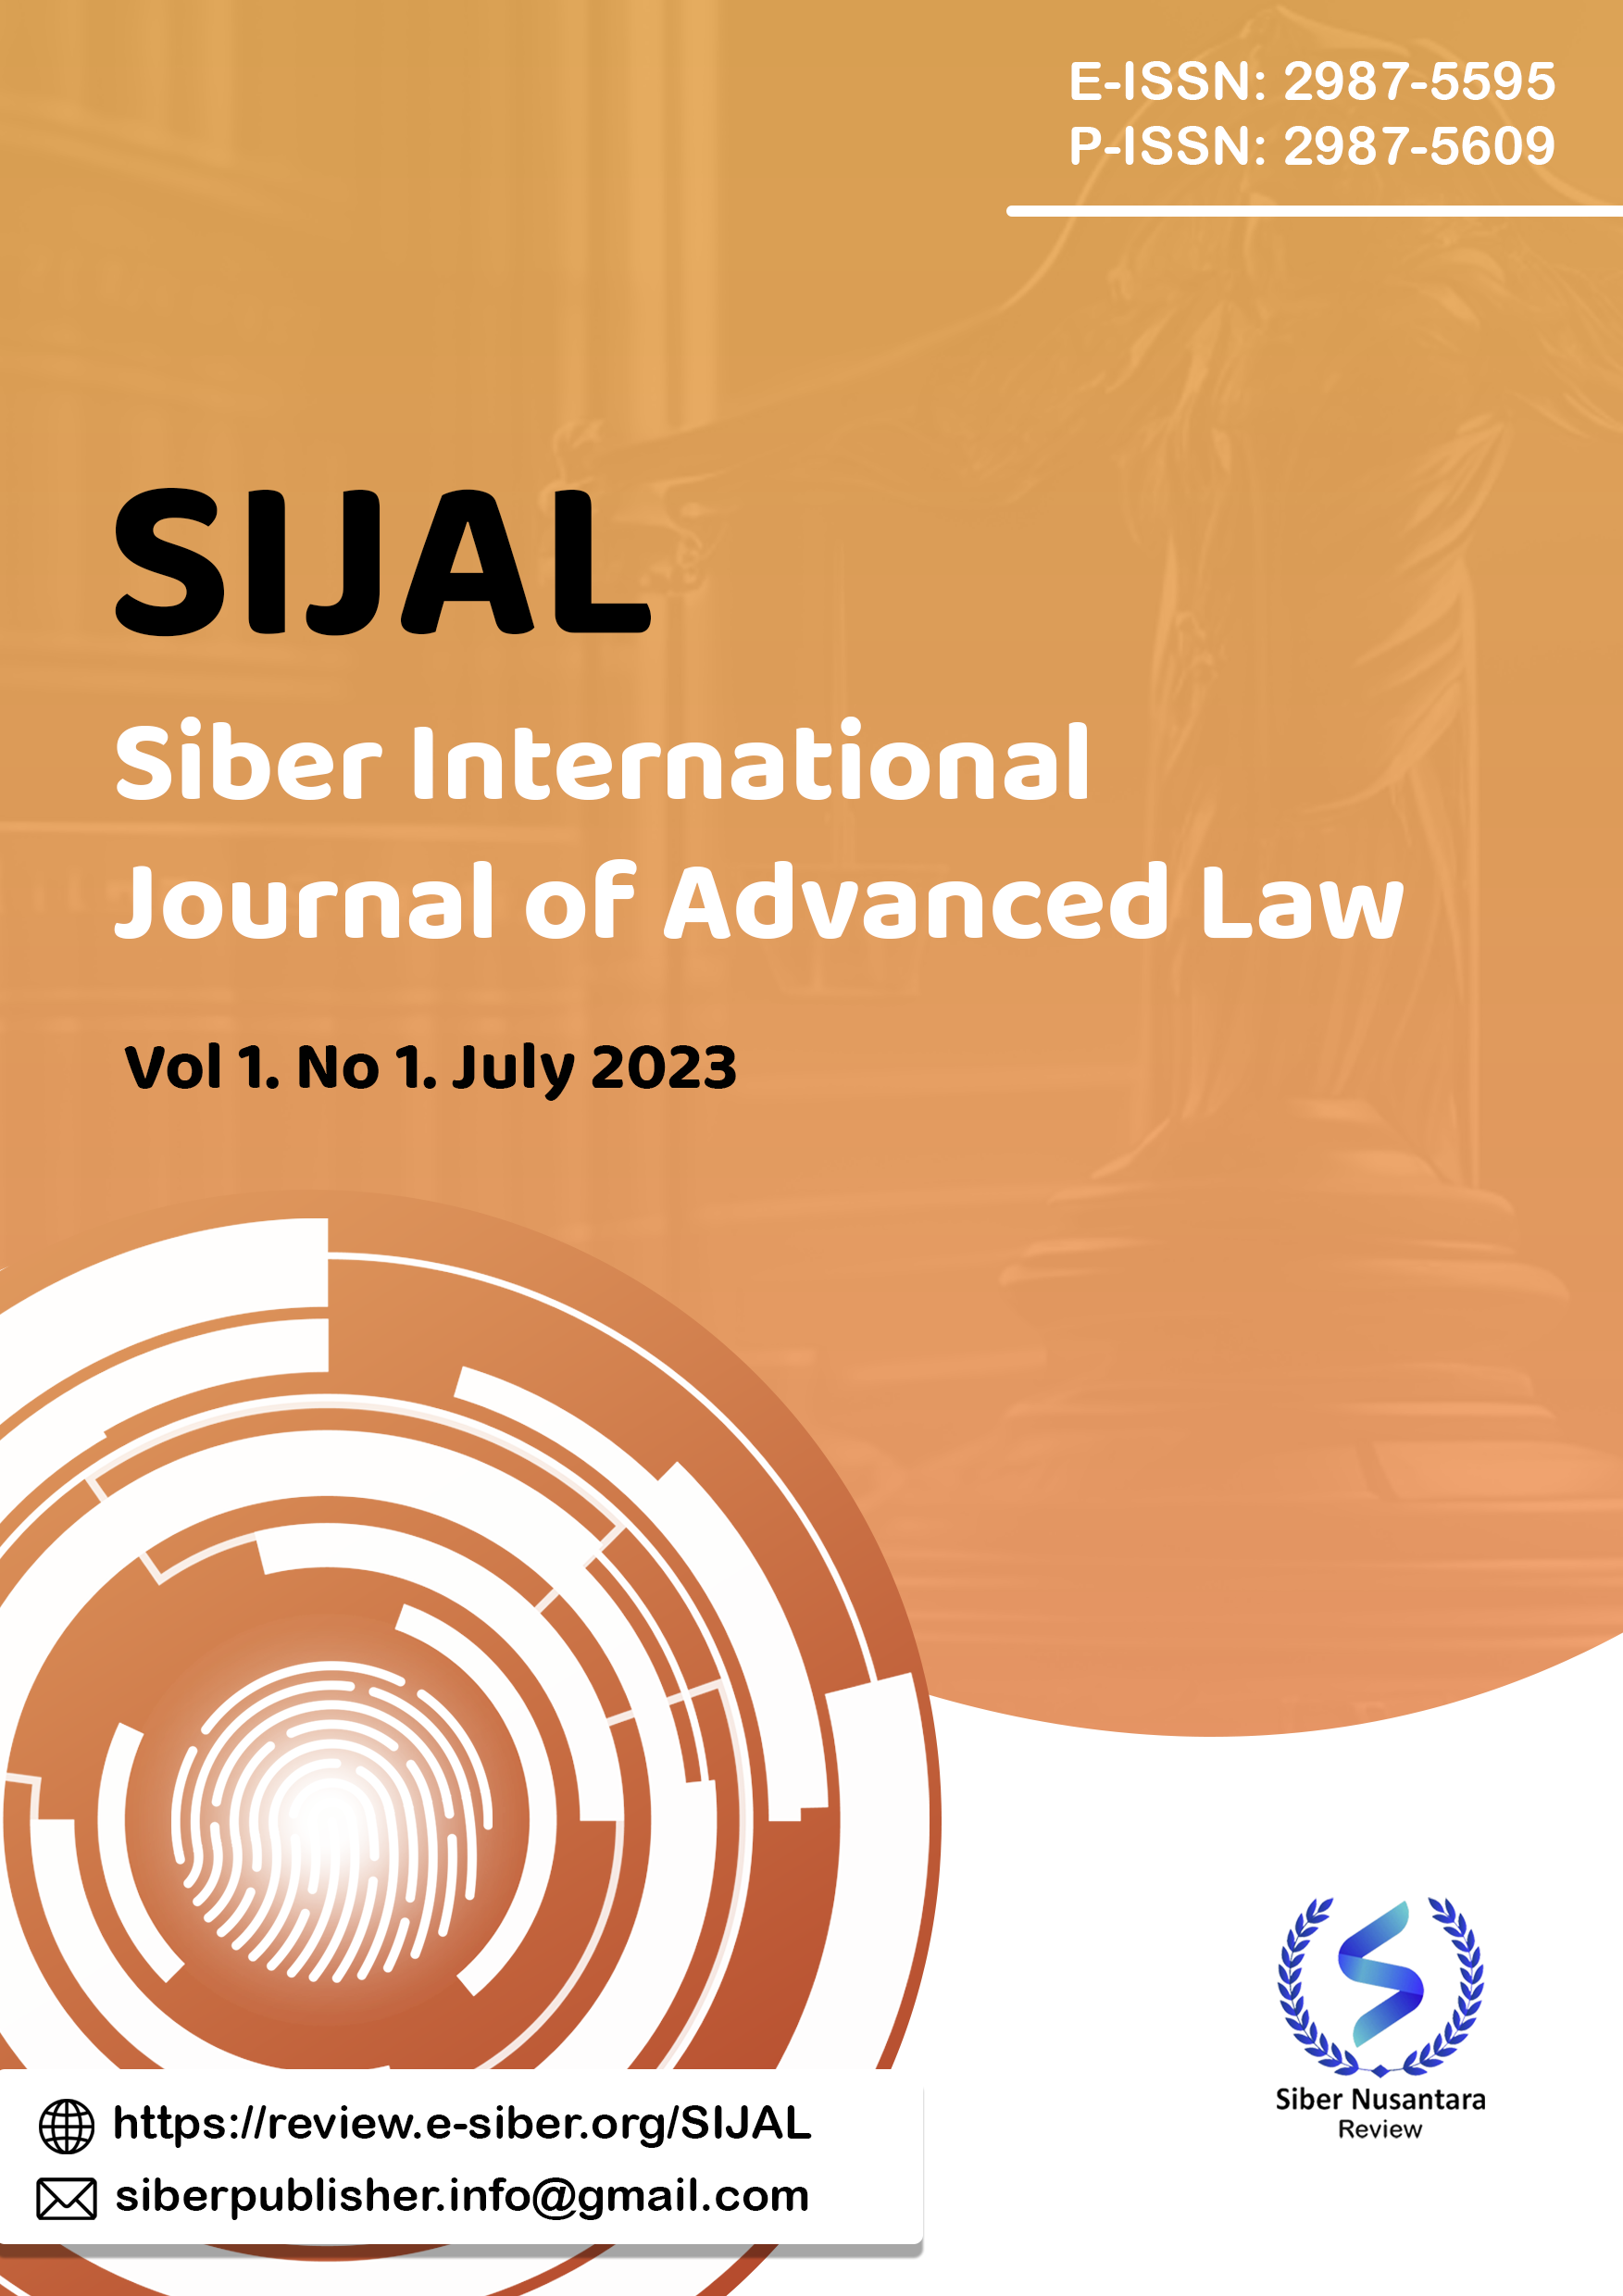 					View Vol. 1 No. 1 (2023): (SIJAL) Siber International Journal of Advanced Law (July 2023)
				